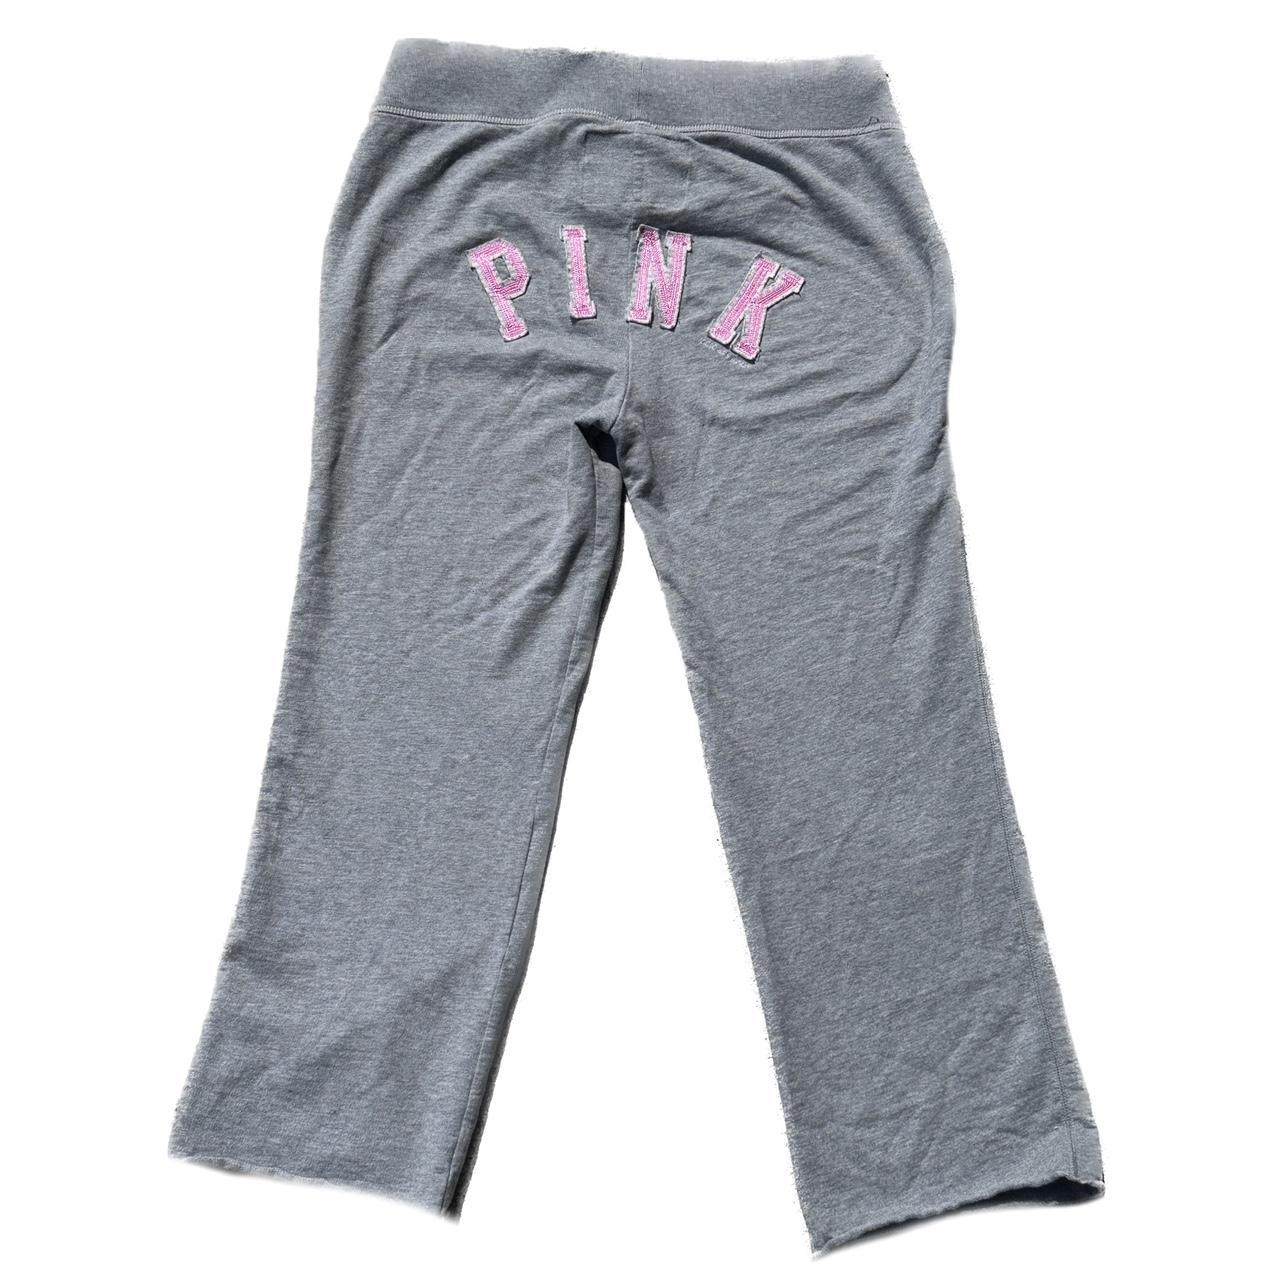 VICTORIA SECRET /PINK sweatpants in grey 🤩🤩 , Have